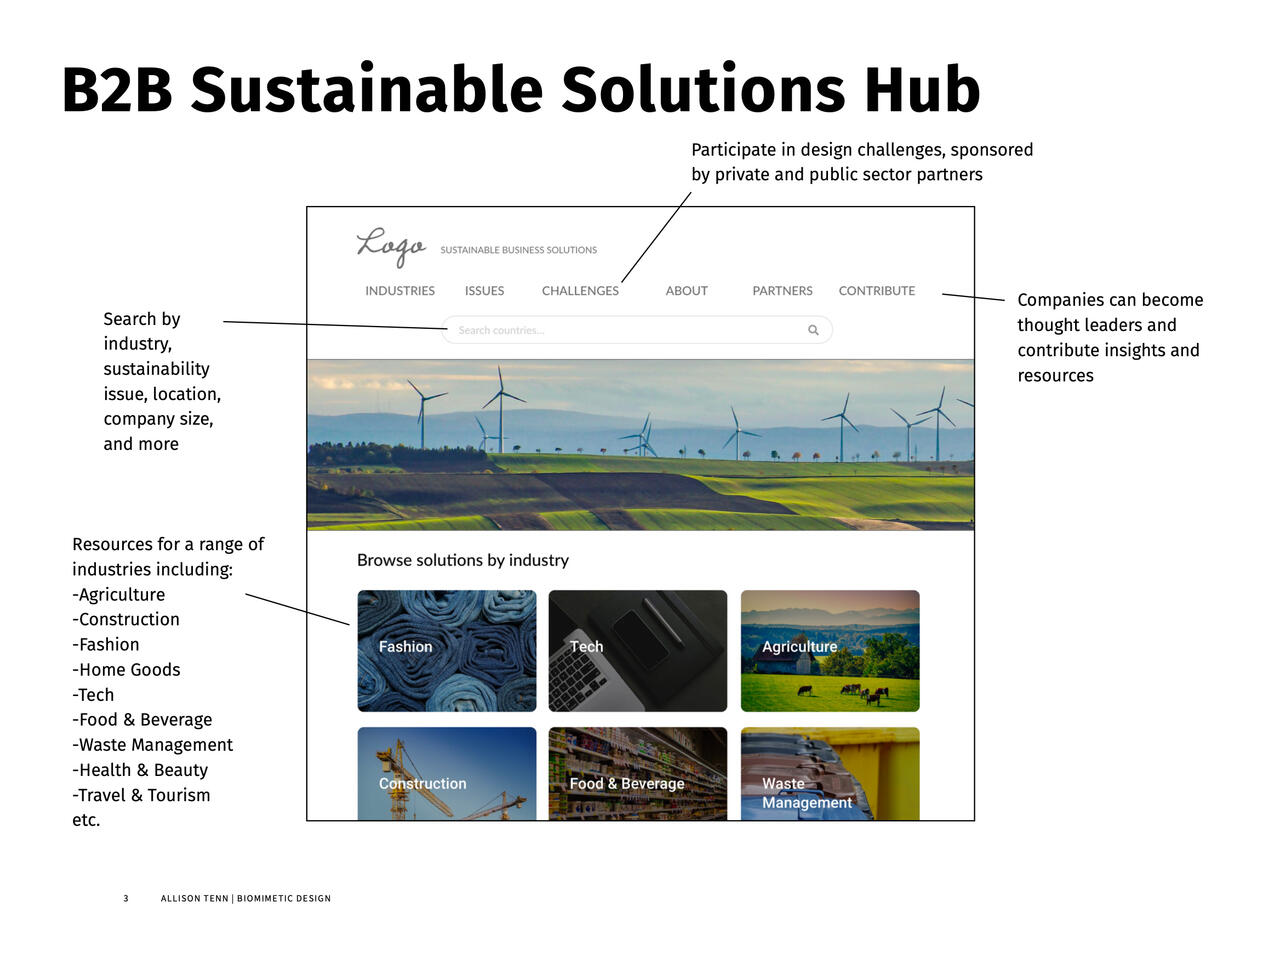 B2B Sustainable Solutions Hub presentation by Allison Tenn